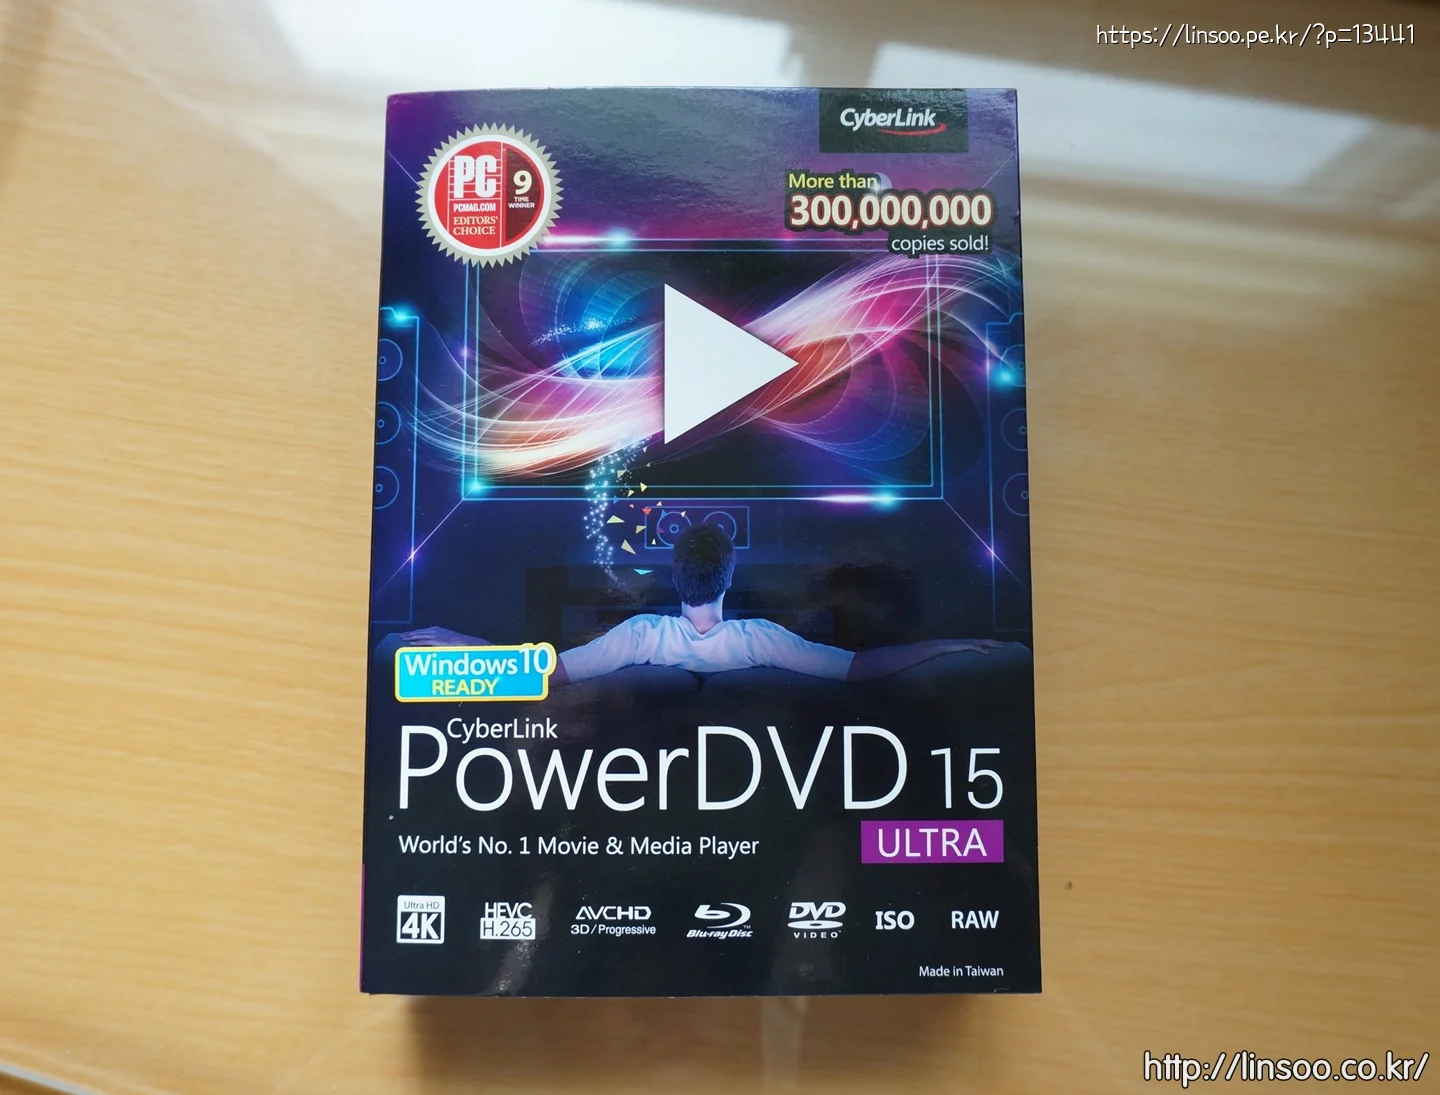 PowerDVD 15 Package